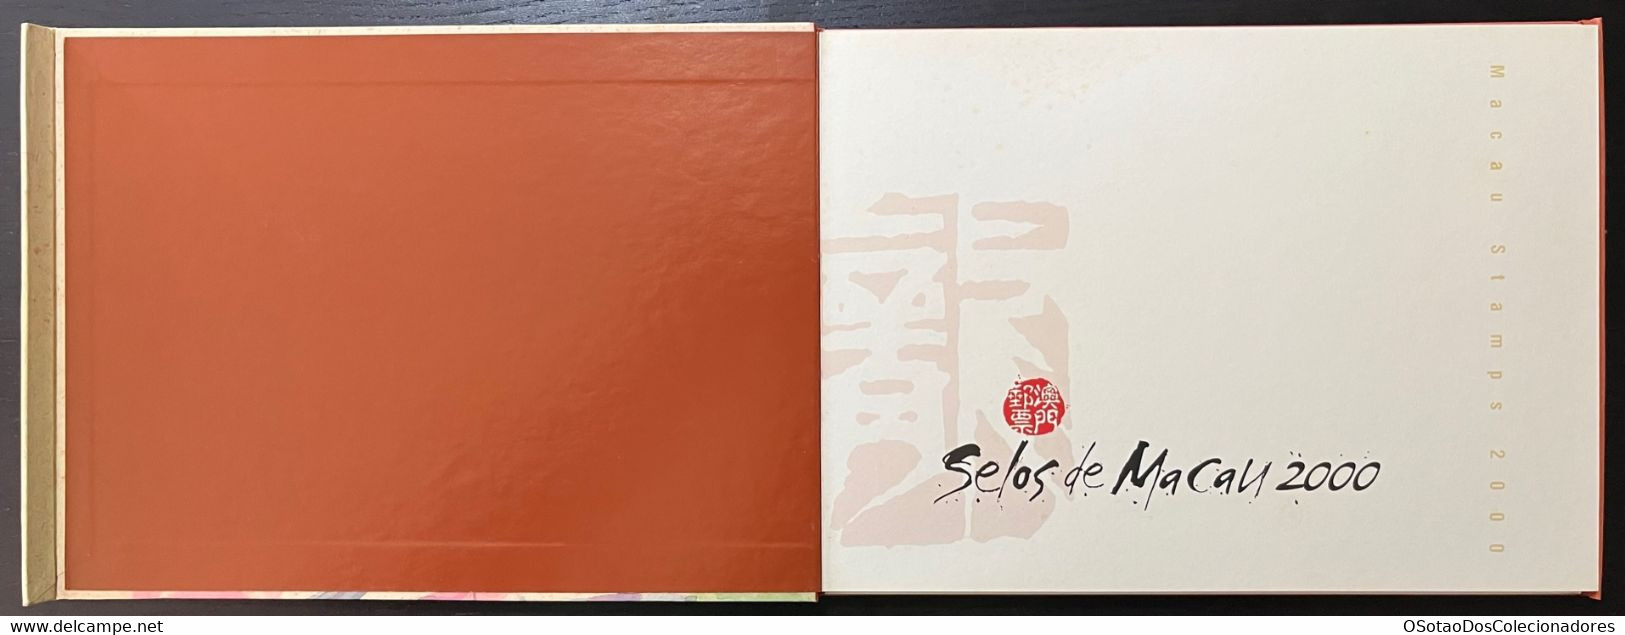 Macau Macao - China Chine - Annual Album 2000 - Macao's Stamps - Livro Anual De Selos De Macau 2000 - Carteira Jaarboek - Full Years